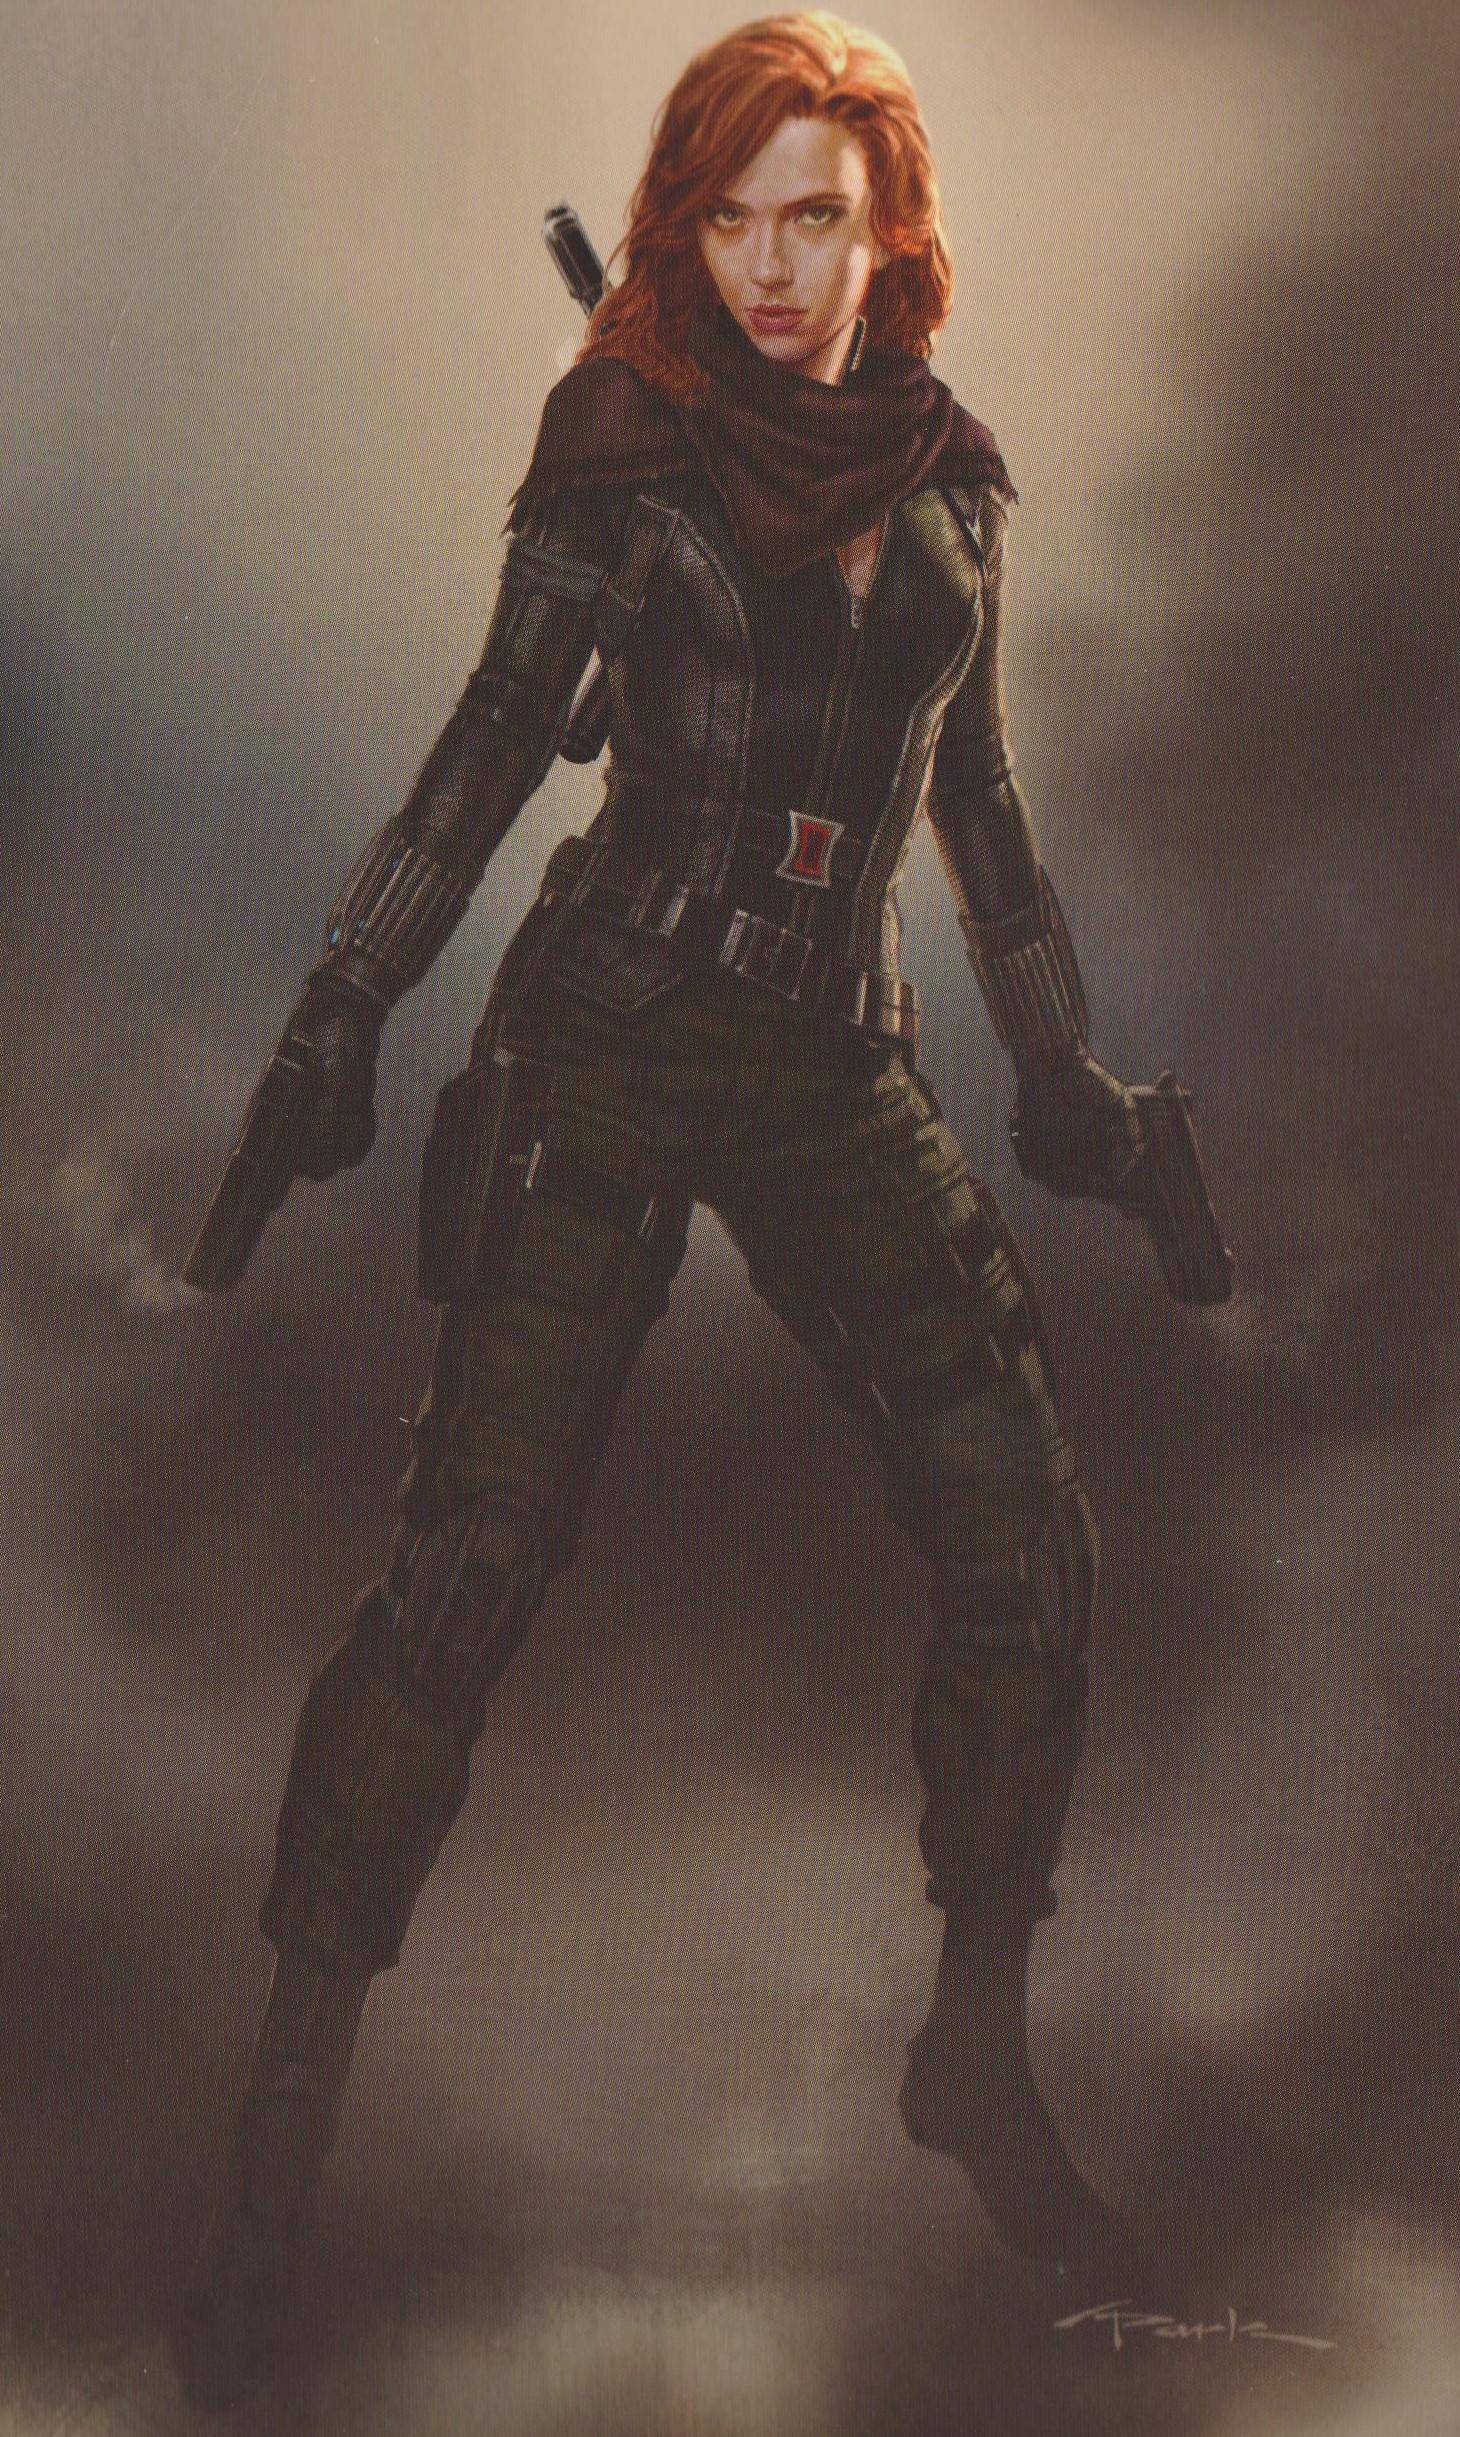 Image Avengers Infinity War Black Widow Concept Art 1 Marvel Cinematic Universe Wiki